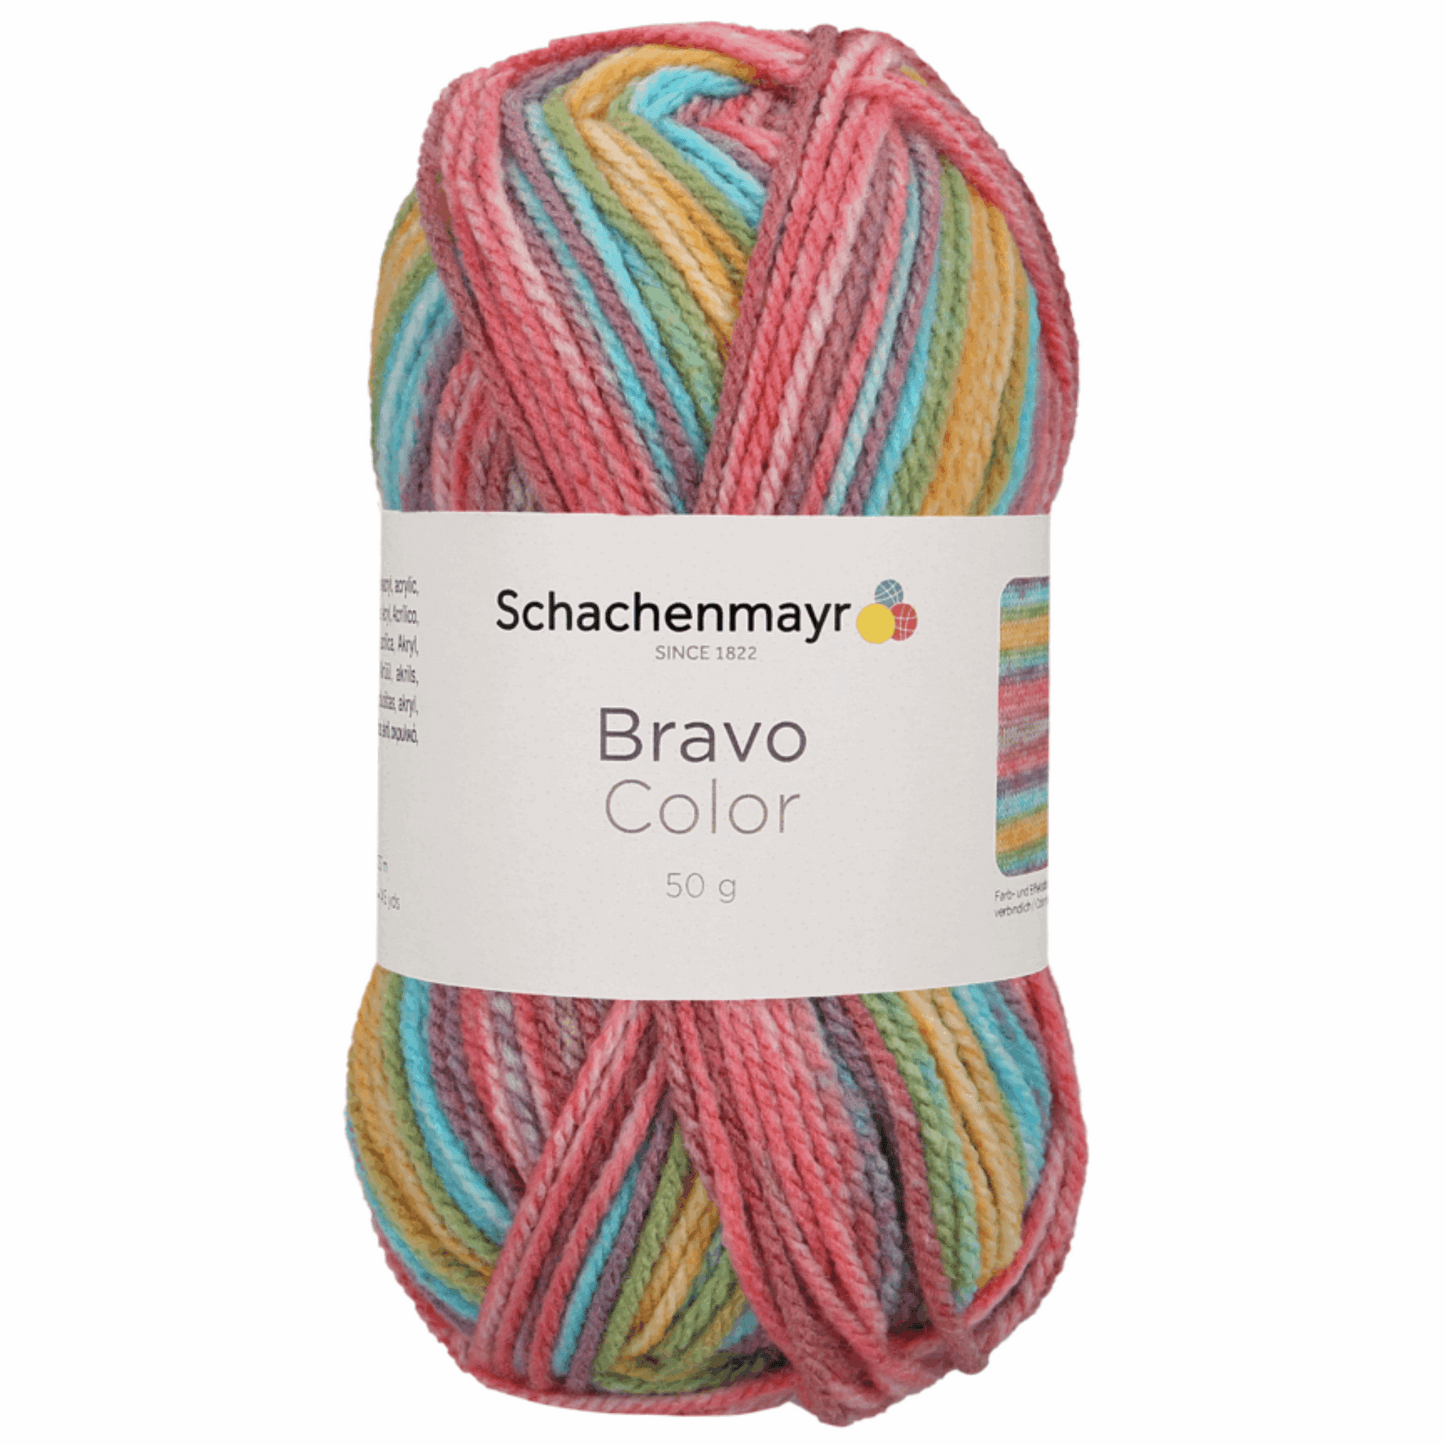 Schachenmayr Bravo Color 50g, 90421, Farbe Clown Color 2120